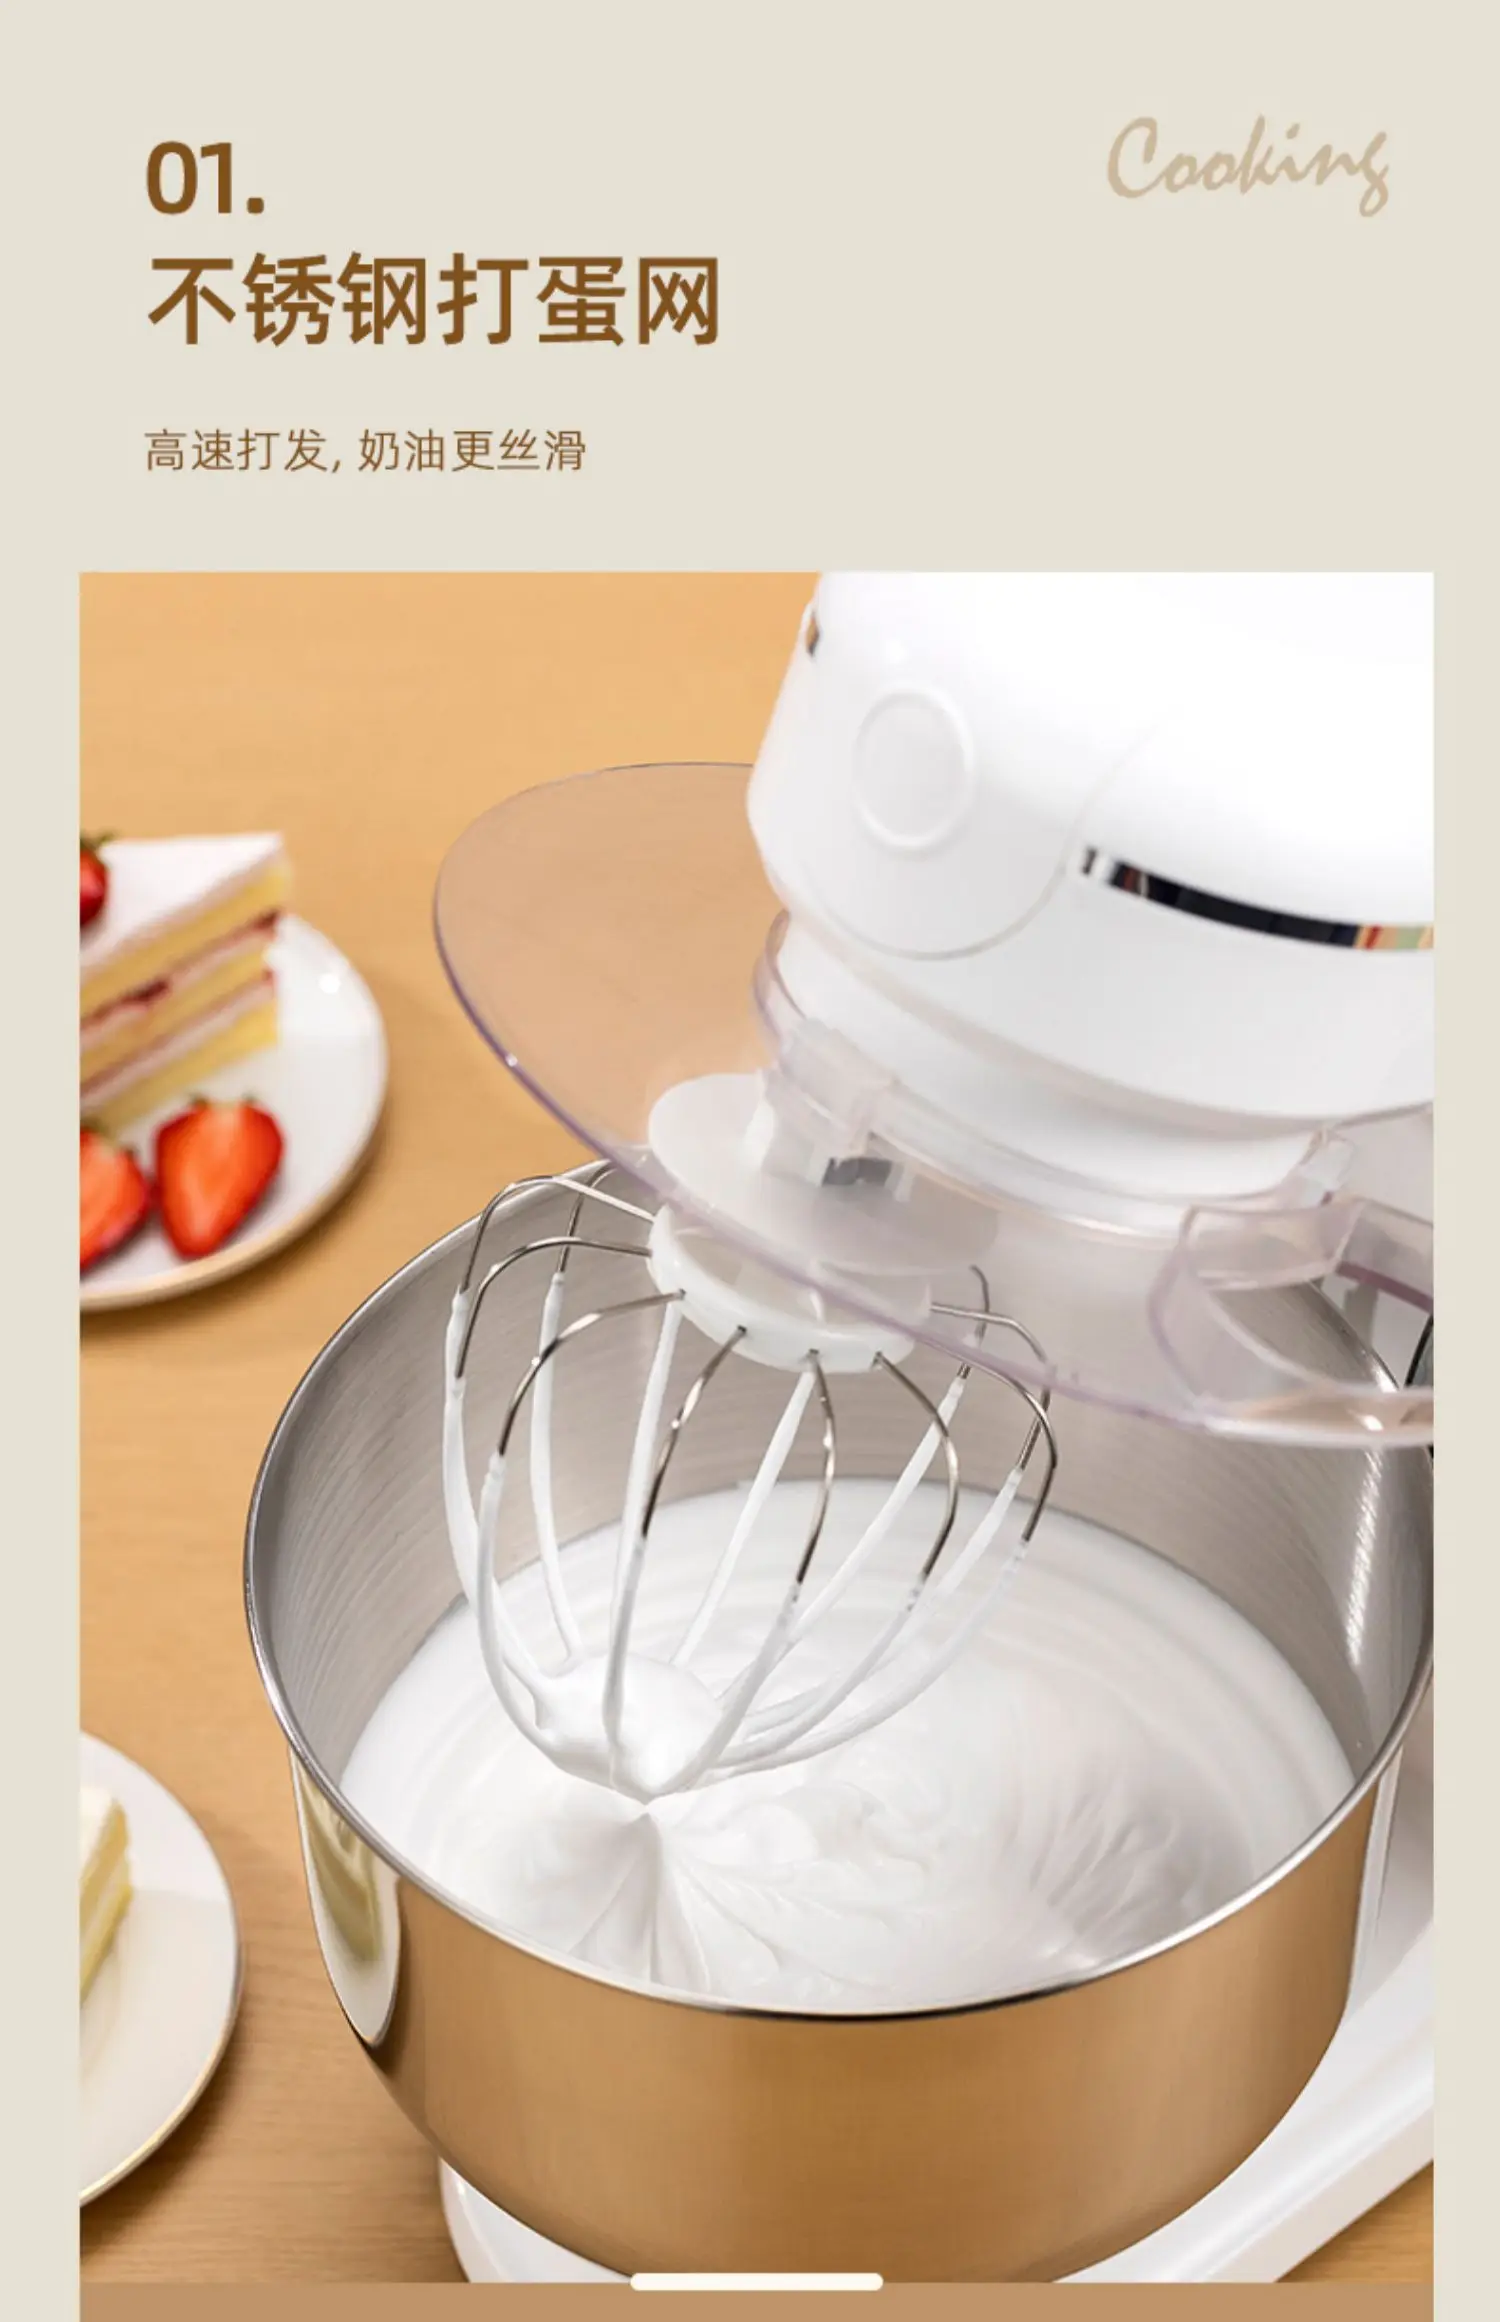 Mixer Kitchen Stand Mixer Household Flour-Mixing Machine Kneading Dough  Cream Whipper 5l Low Noise Noodles Mixer Dough Mixer - AliExpress